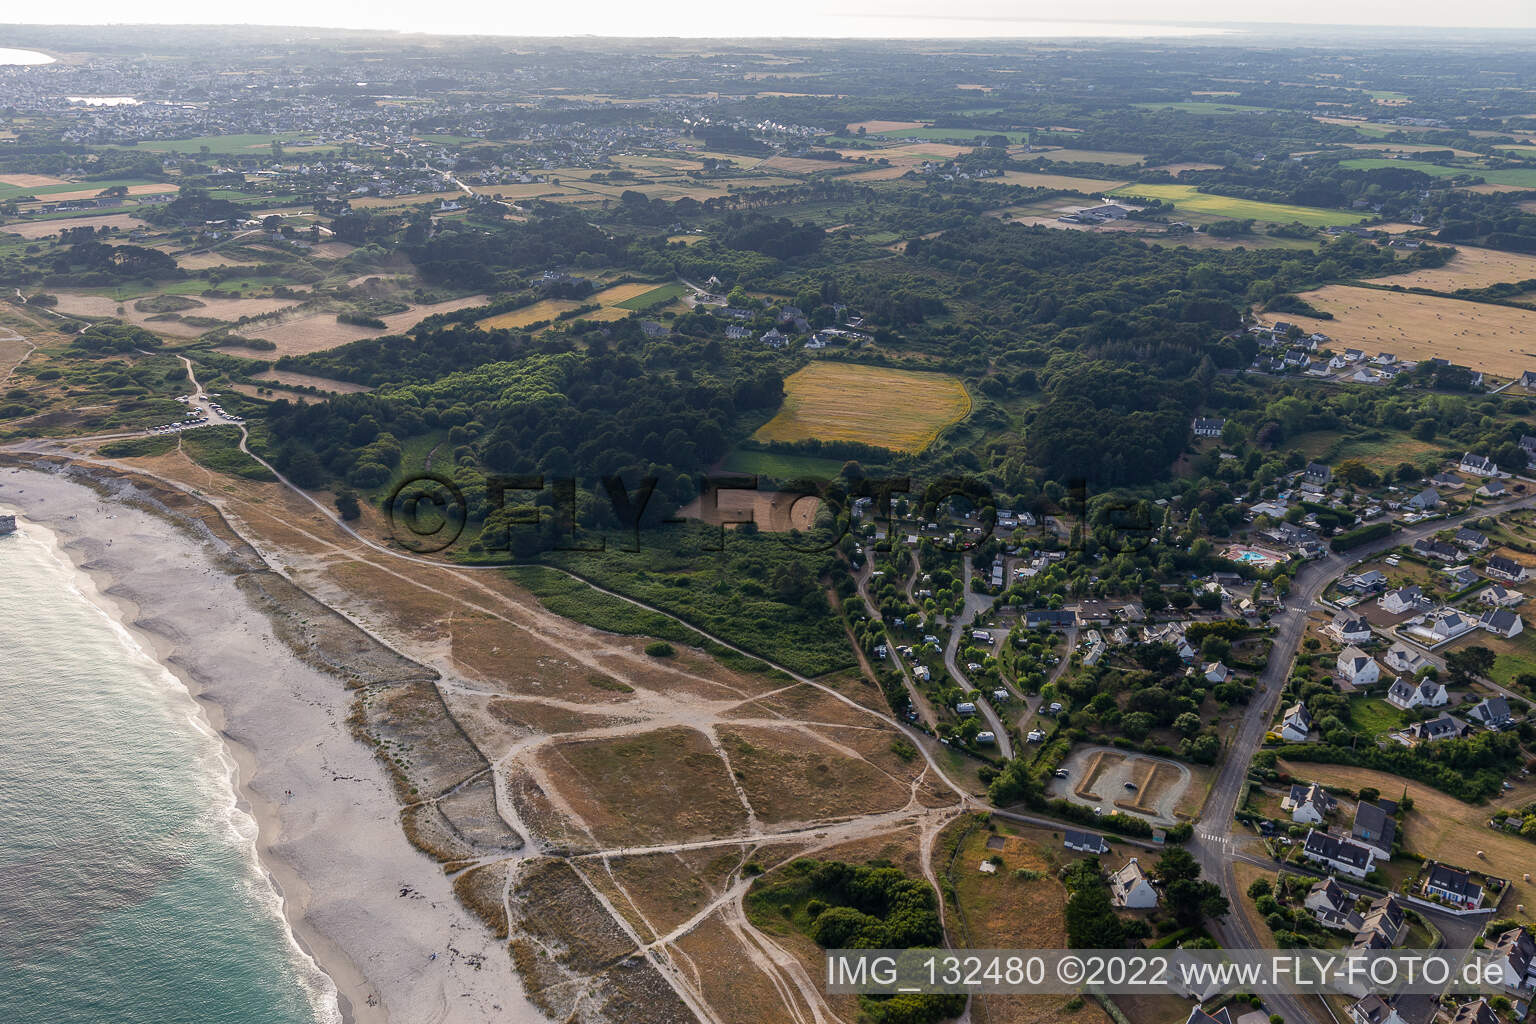 Luftbild von Camping Des Dunes, Flower Camping La Grande Plage in Plobannalec-Lesconil im Bundesland Finistère, Frankreich